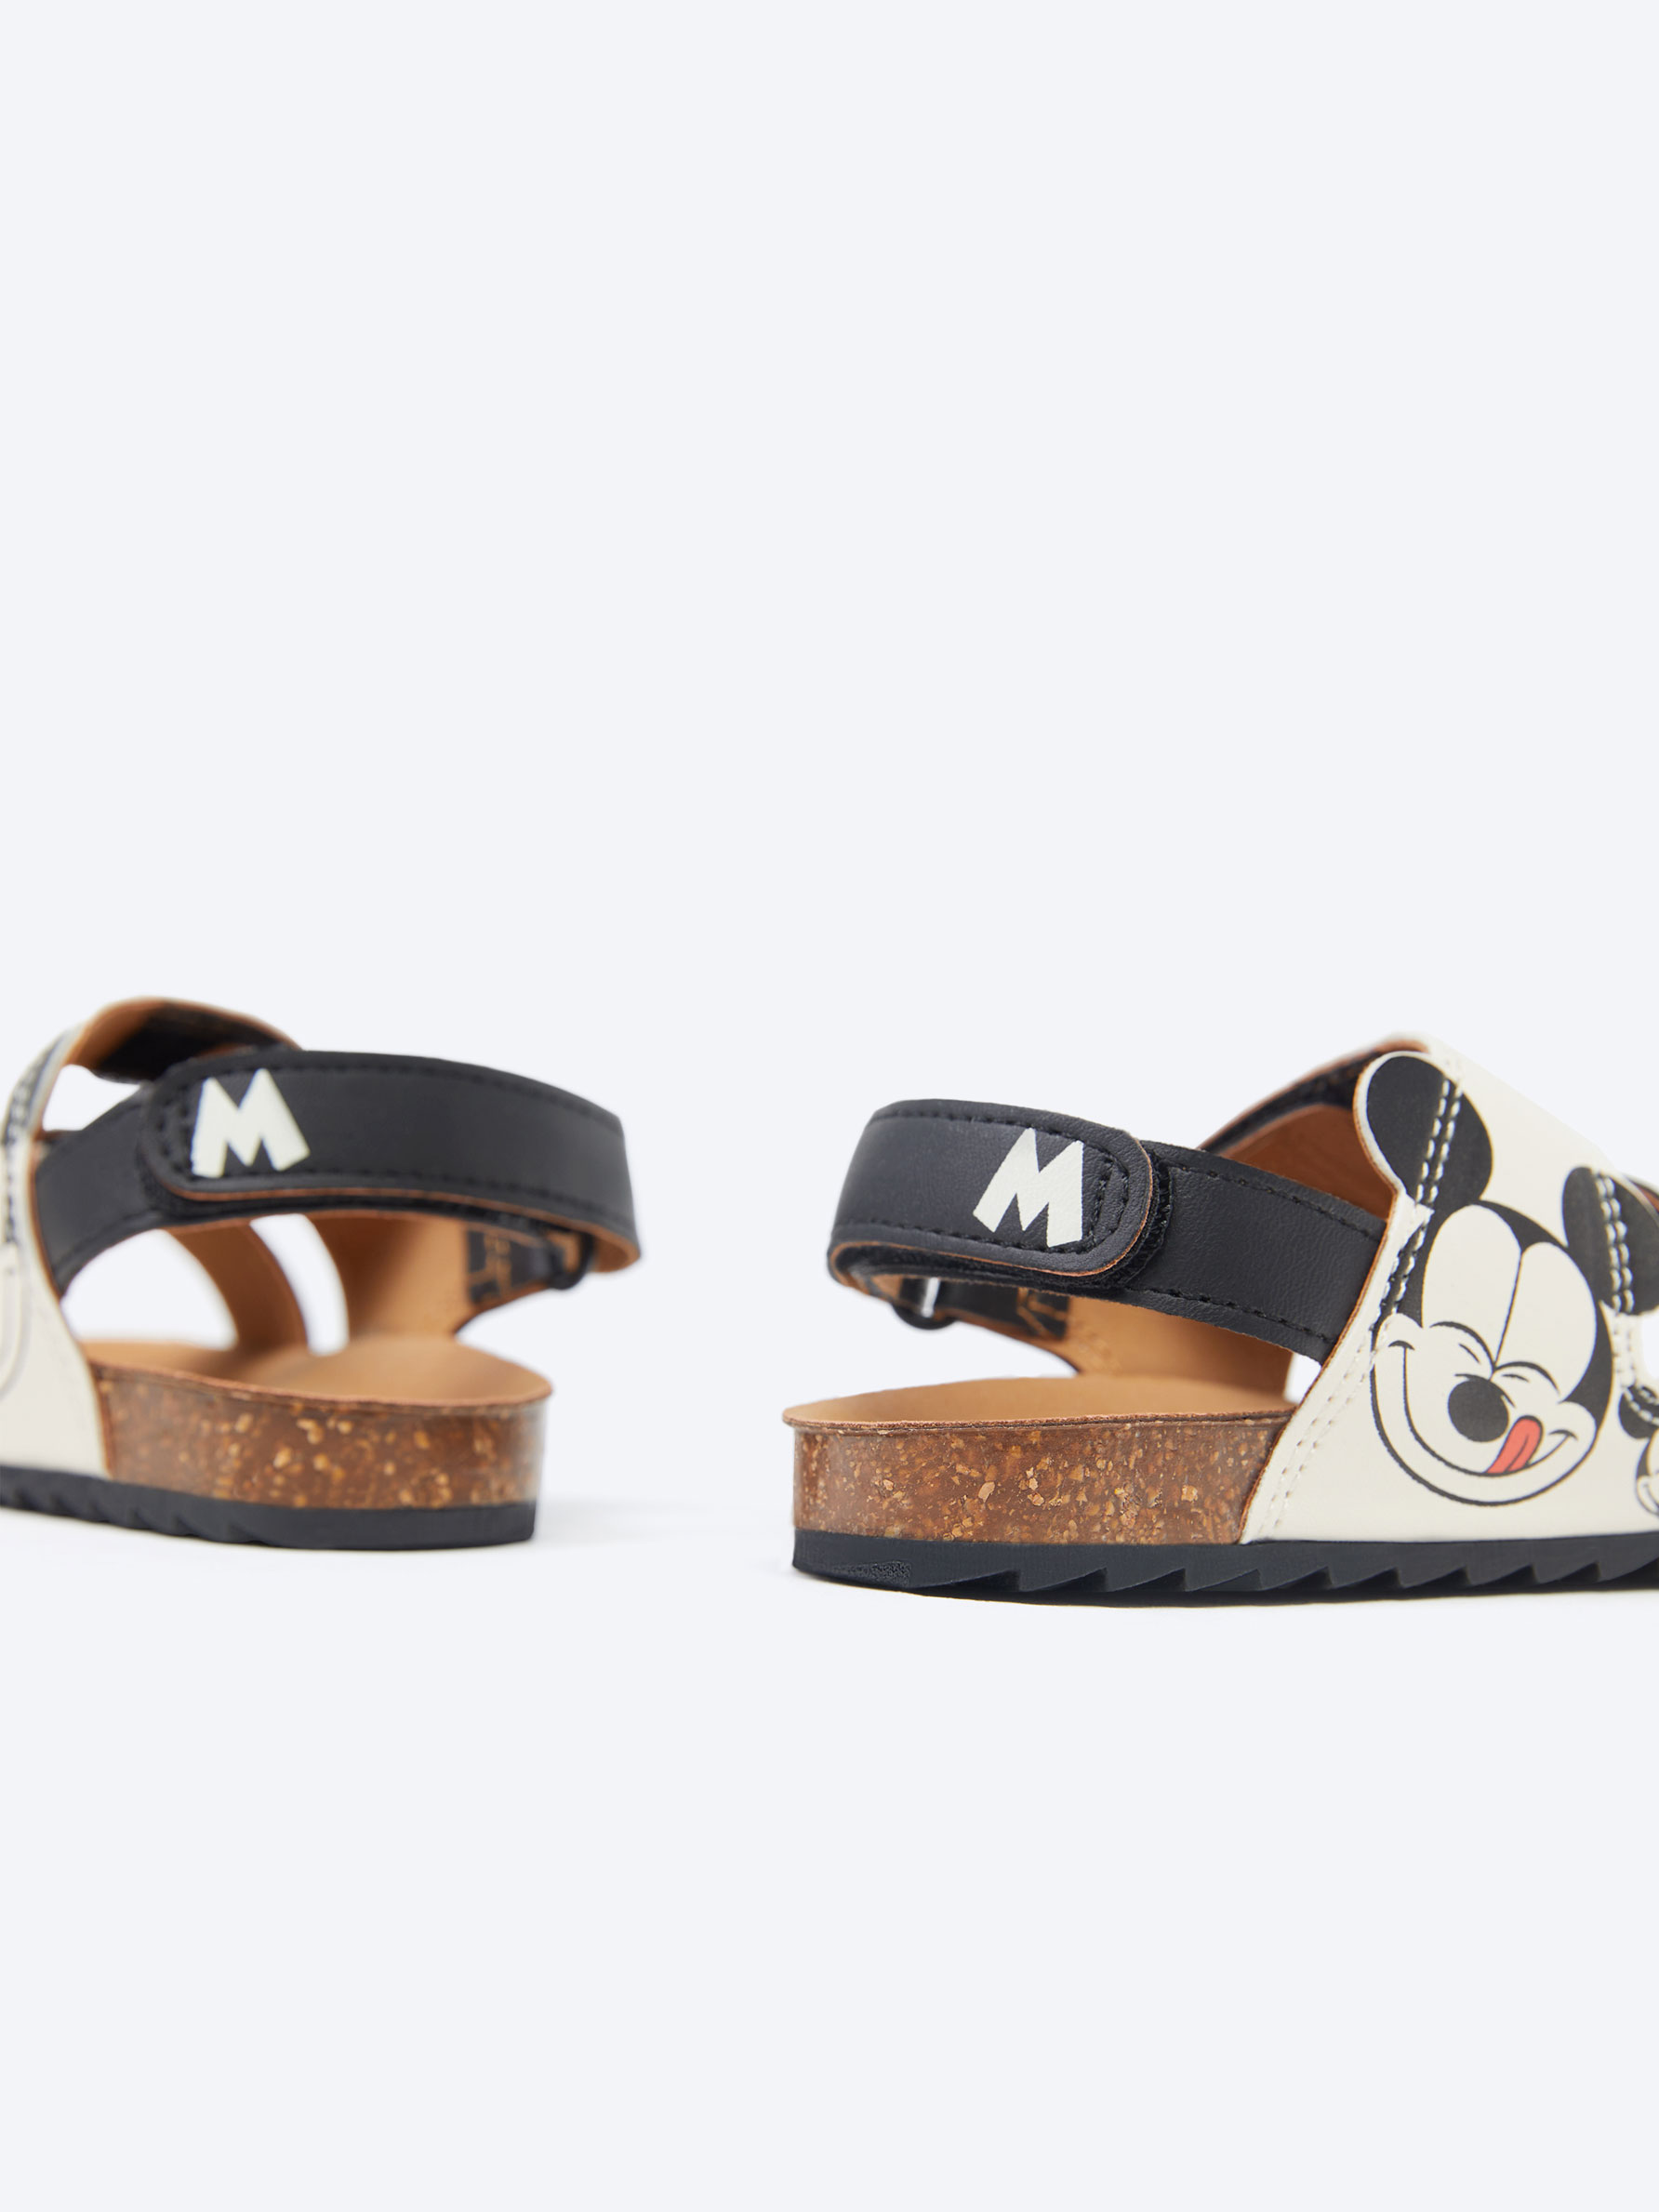 Disney | Shoes | Disney Mens Mickey Mouse Sandals Flip Flops Black Red Size  | Poshmark